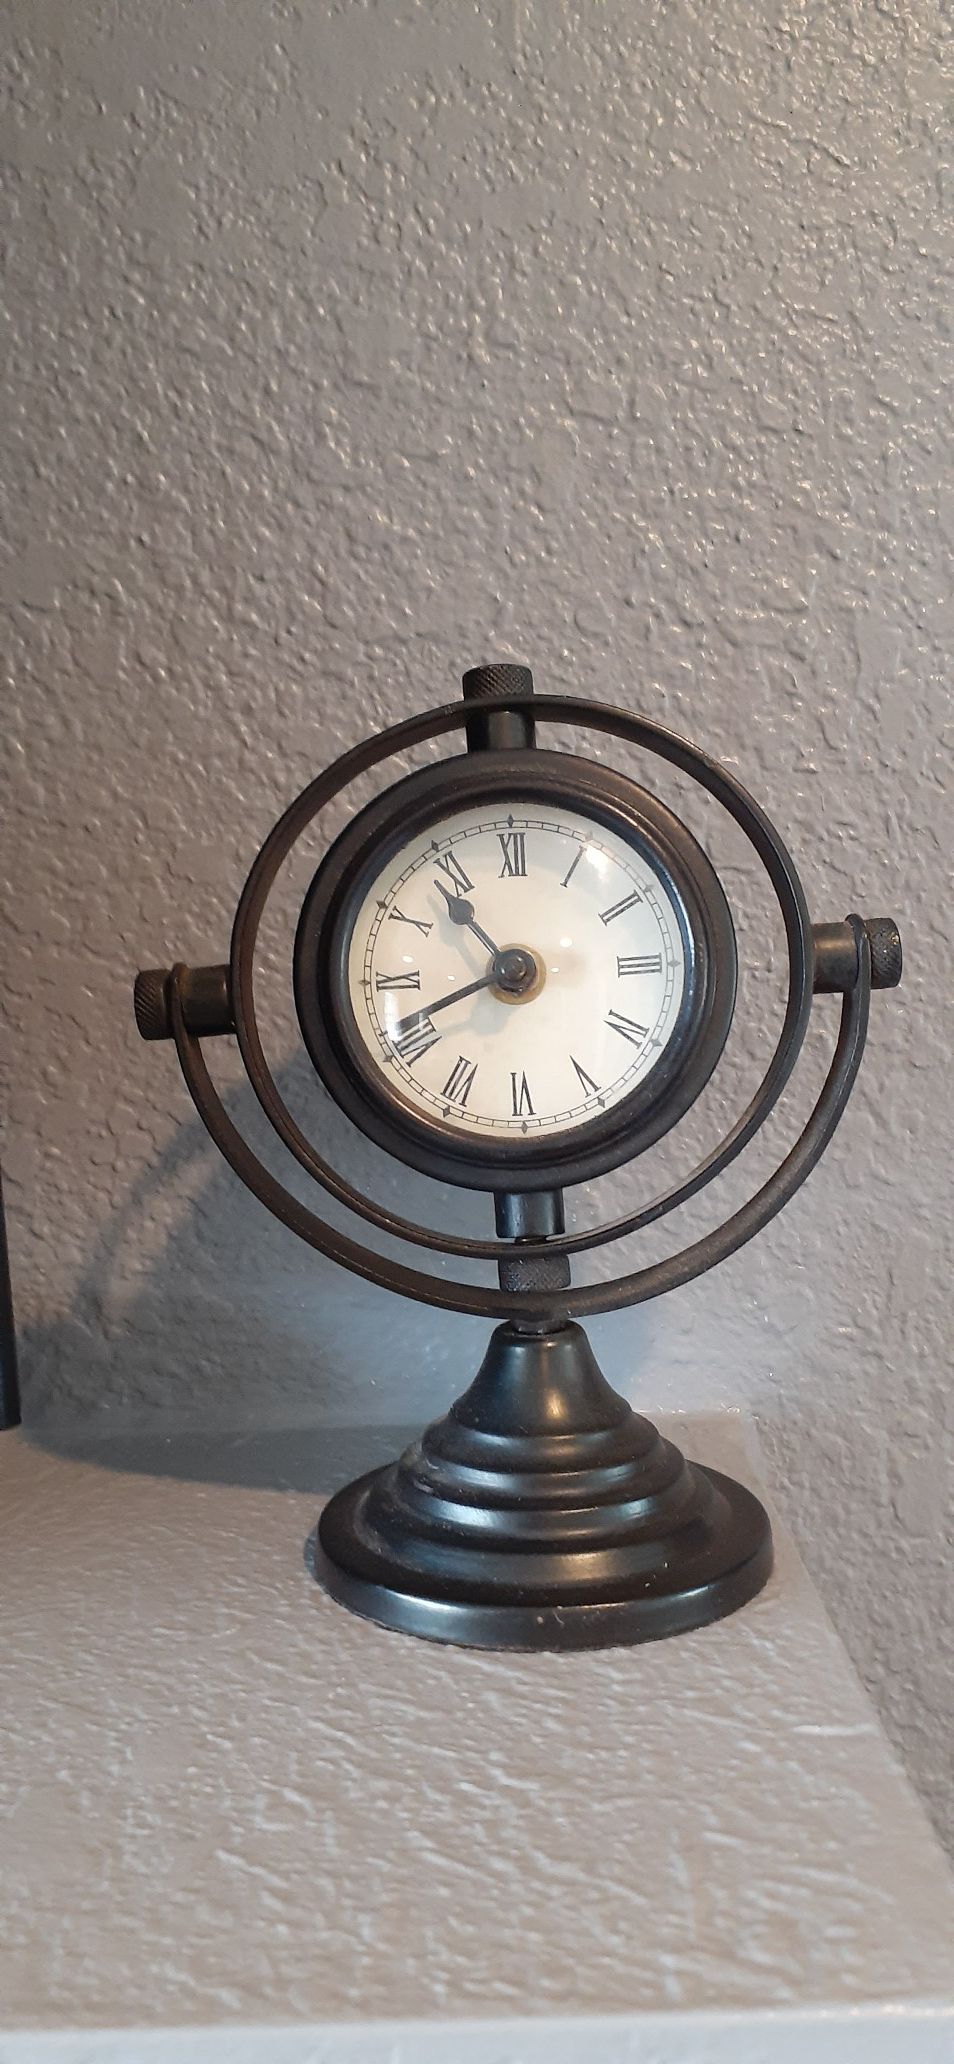 Antique looking clock